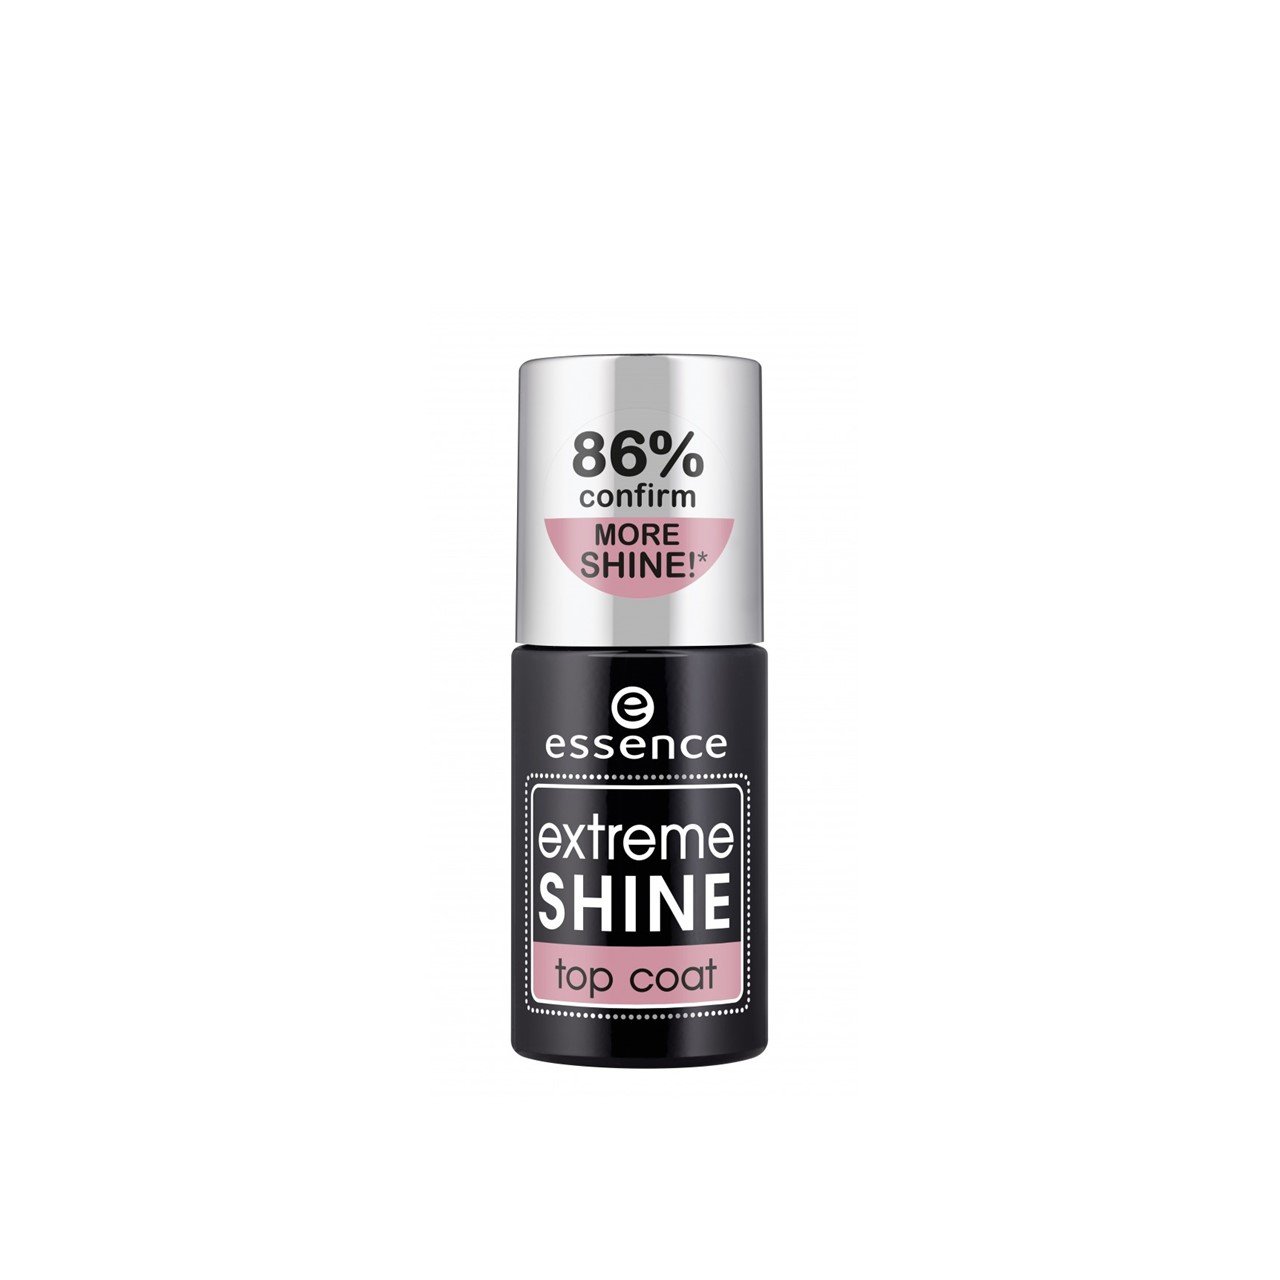 essence Extreme Shine Top Coat 8ml (0.27fl oz)